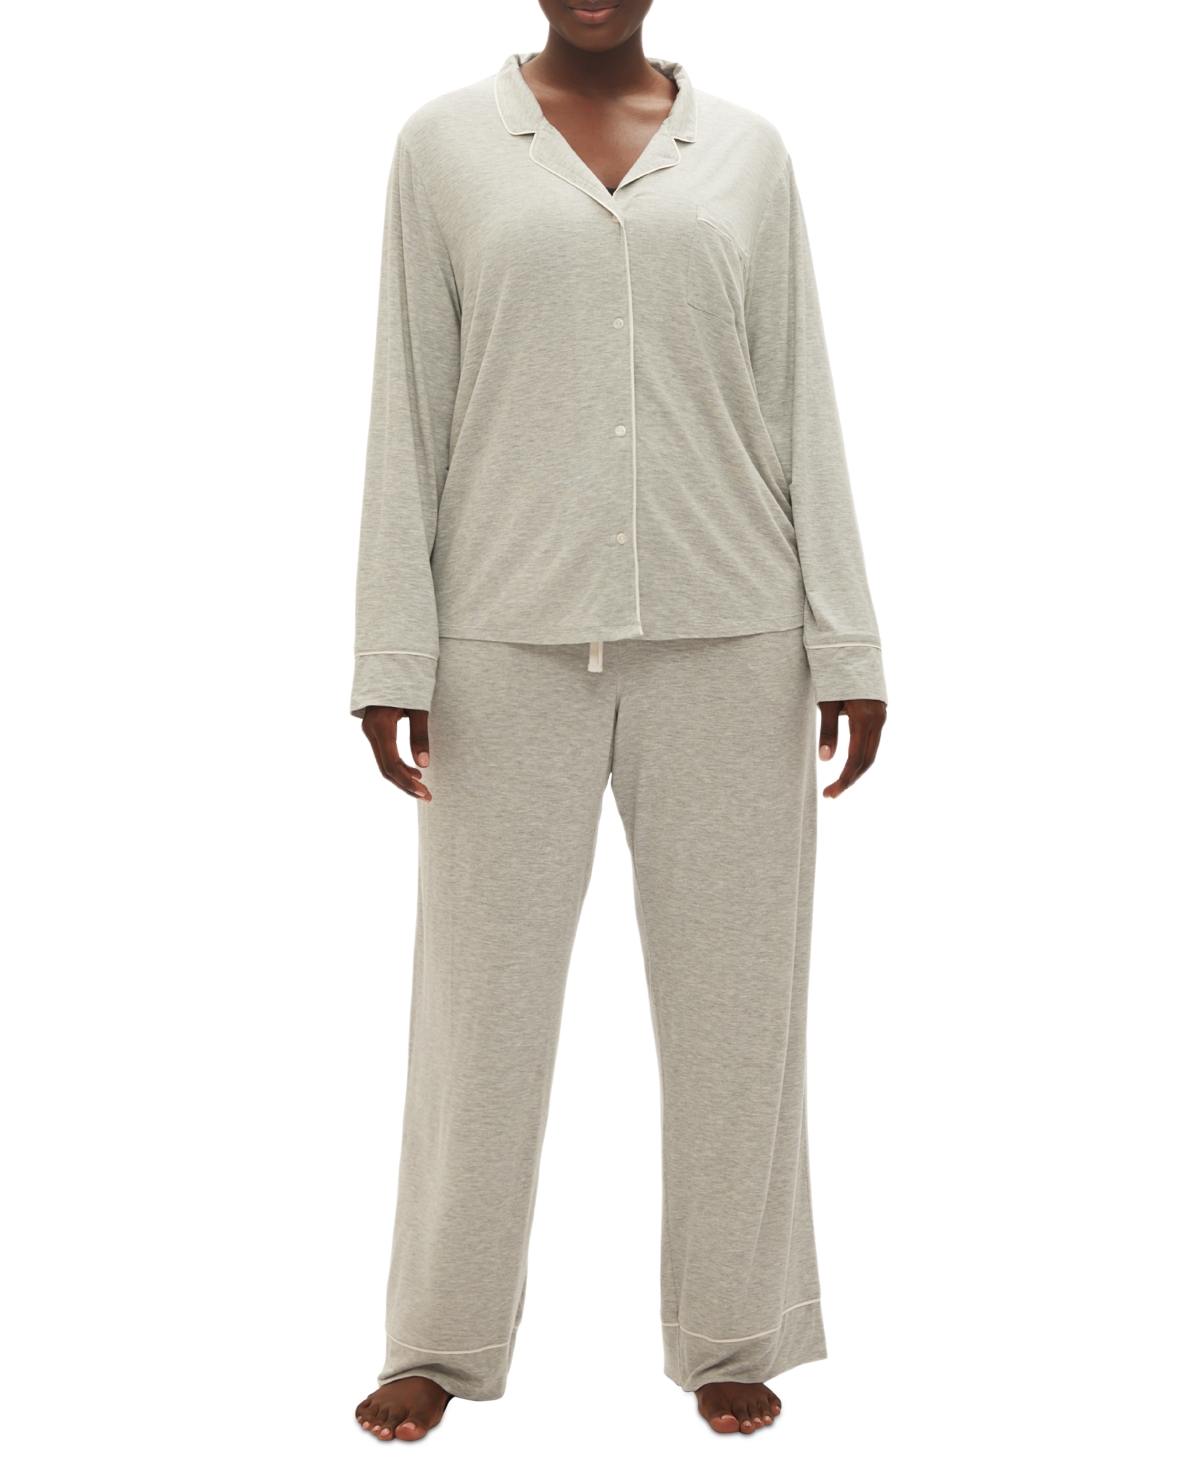 Gap Body Women's 2-Pc. Notched-Collar Long-Sleeve Pajamas Set